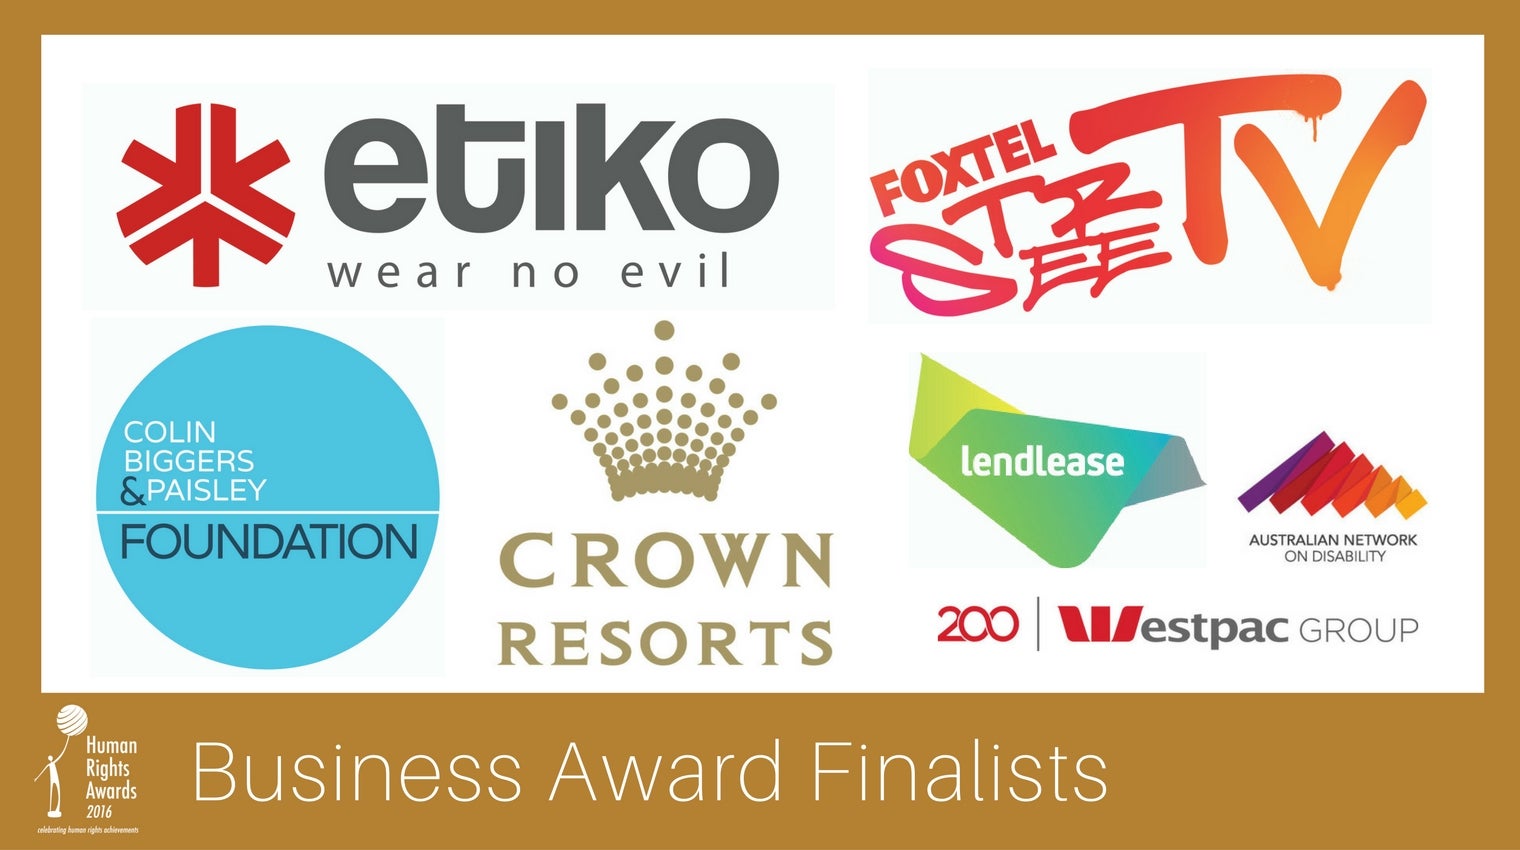 Composite of Business Award finalist logos 2016